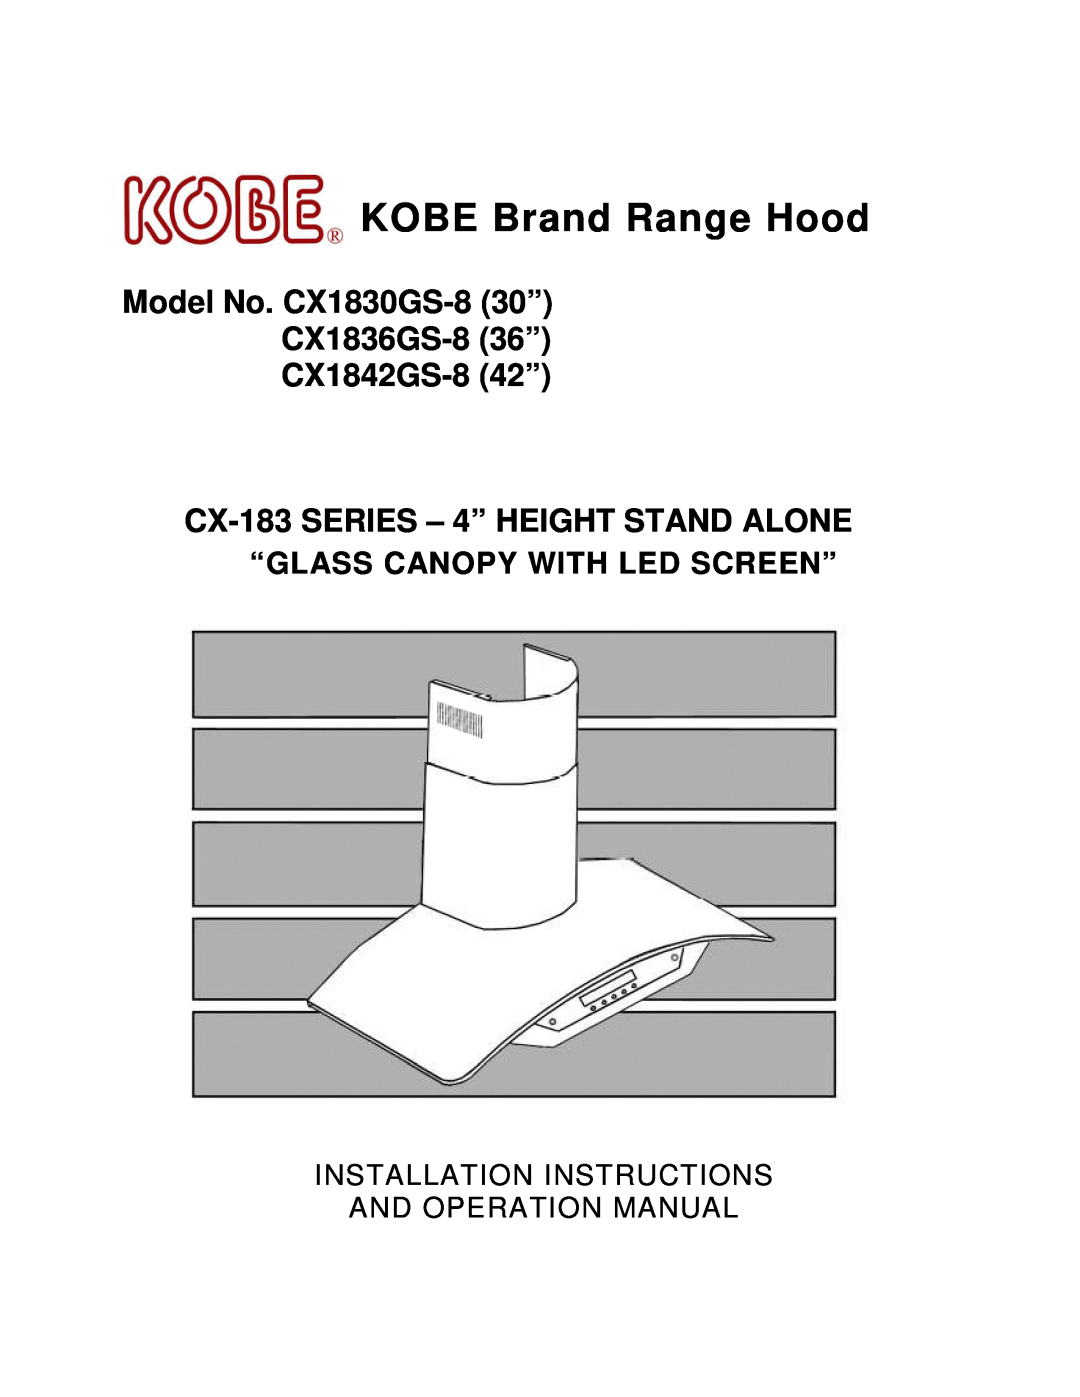 Kobe Range Hoods CX1830GS-8 installation instructions KOBE Brand Range Hood, CX-183 SERIES - 4” HEIGHT STAND ALONE 